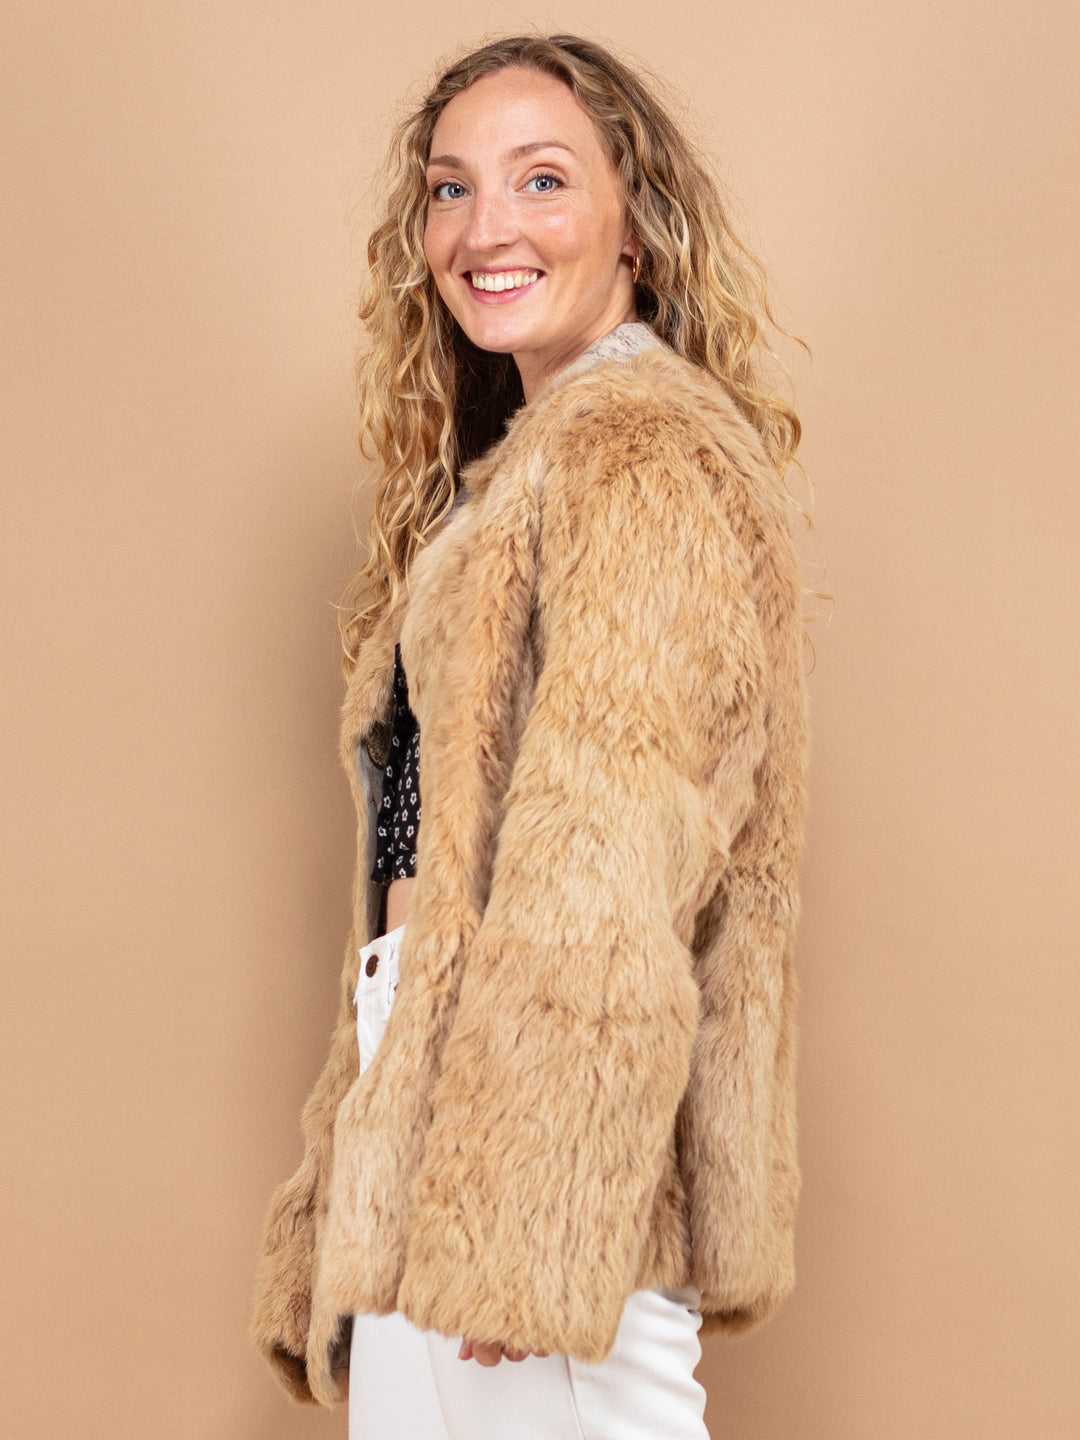 Reversible Fur Coat, Size Medium M Fur Coat, 70s Luxurious Coat, Retro Fur Overcoat, Penny Lane Fur Coat, Retro Chic Fur Coat, 70s Outerwear